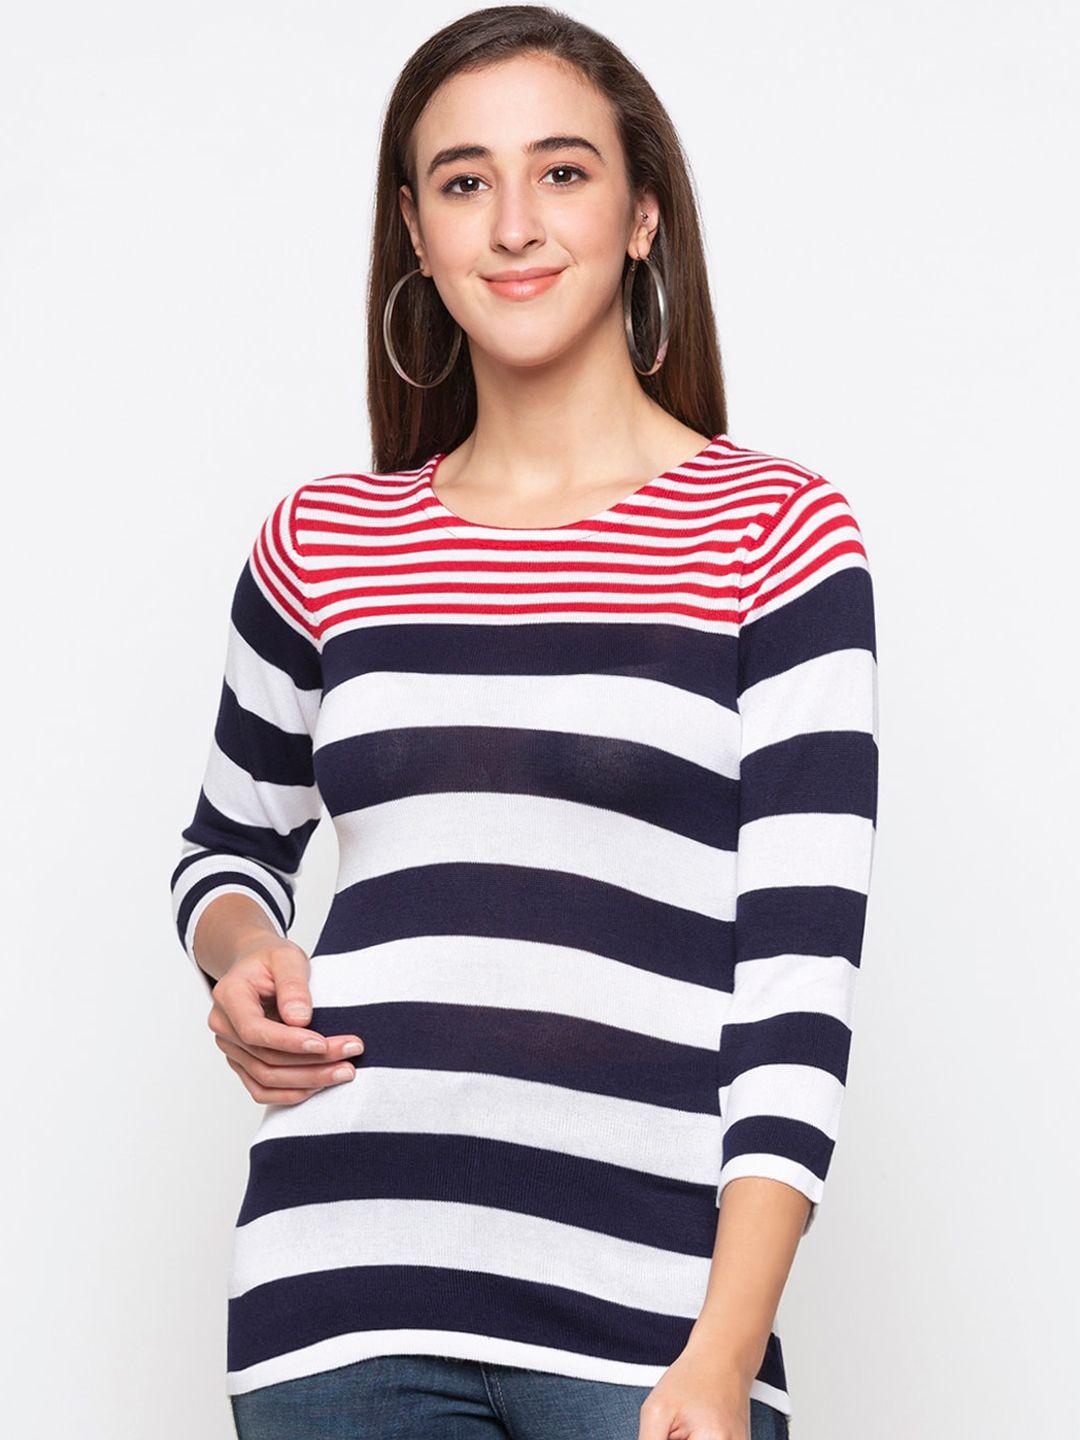 globus women red & navy blue striped top